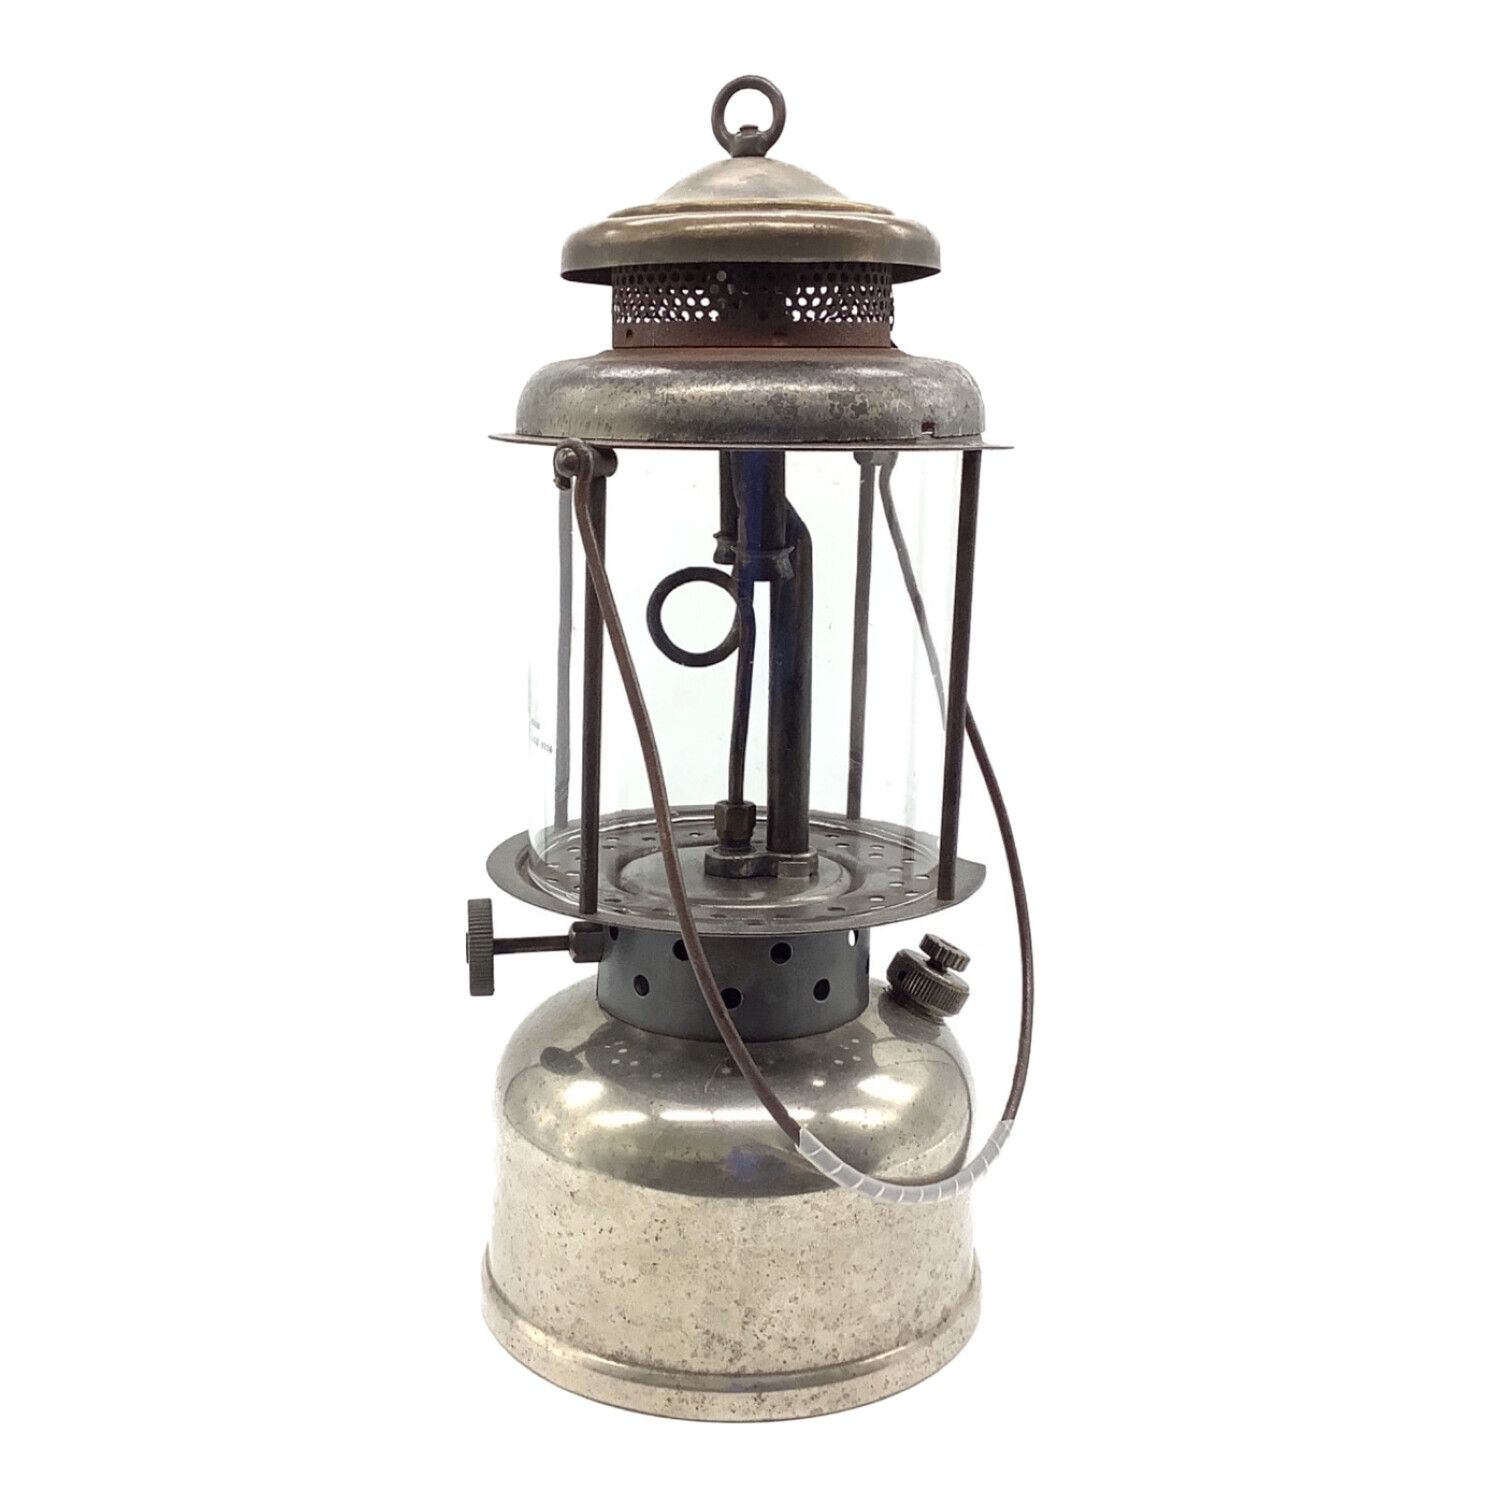 SUNSHINE SAFETY LAMP ヴィンテージガソリンランタン 1920年代製造 